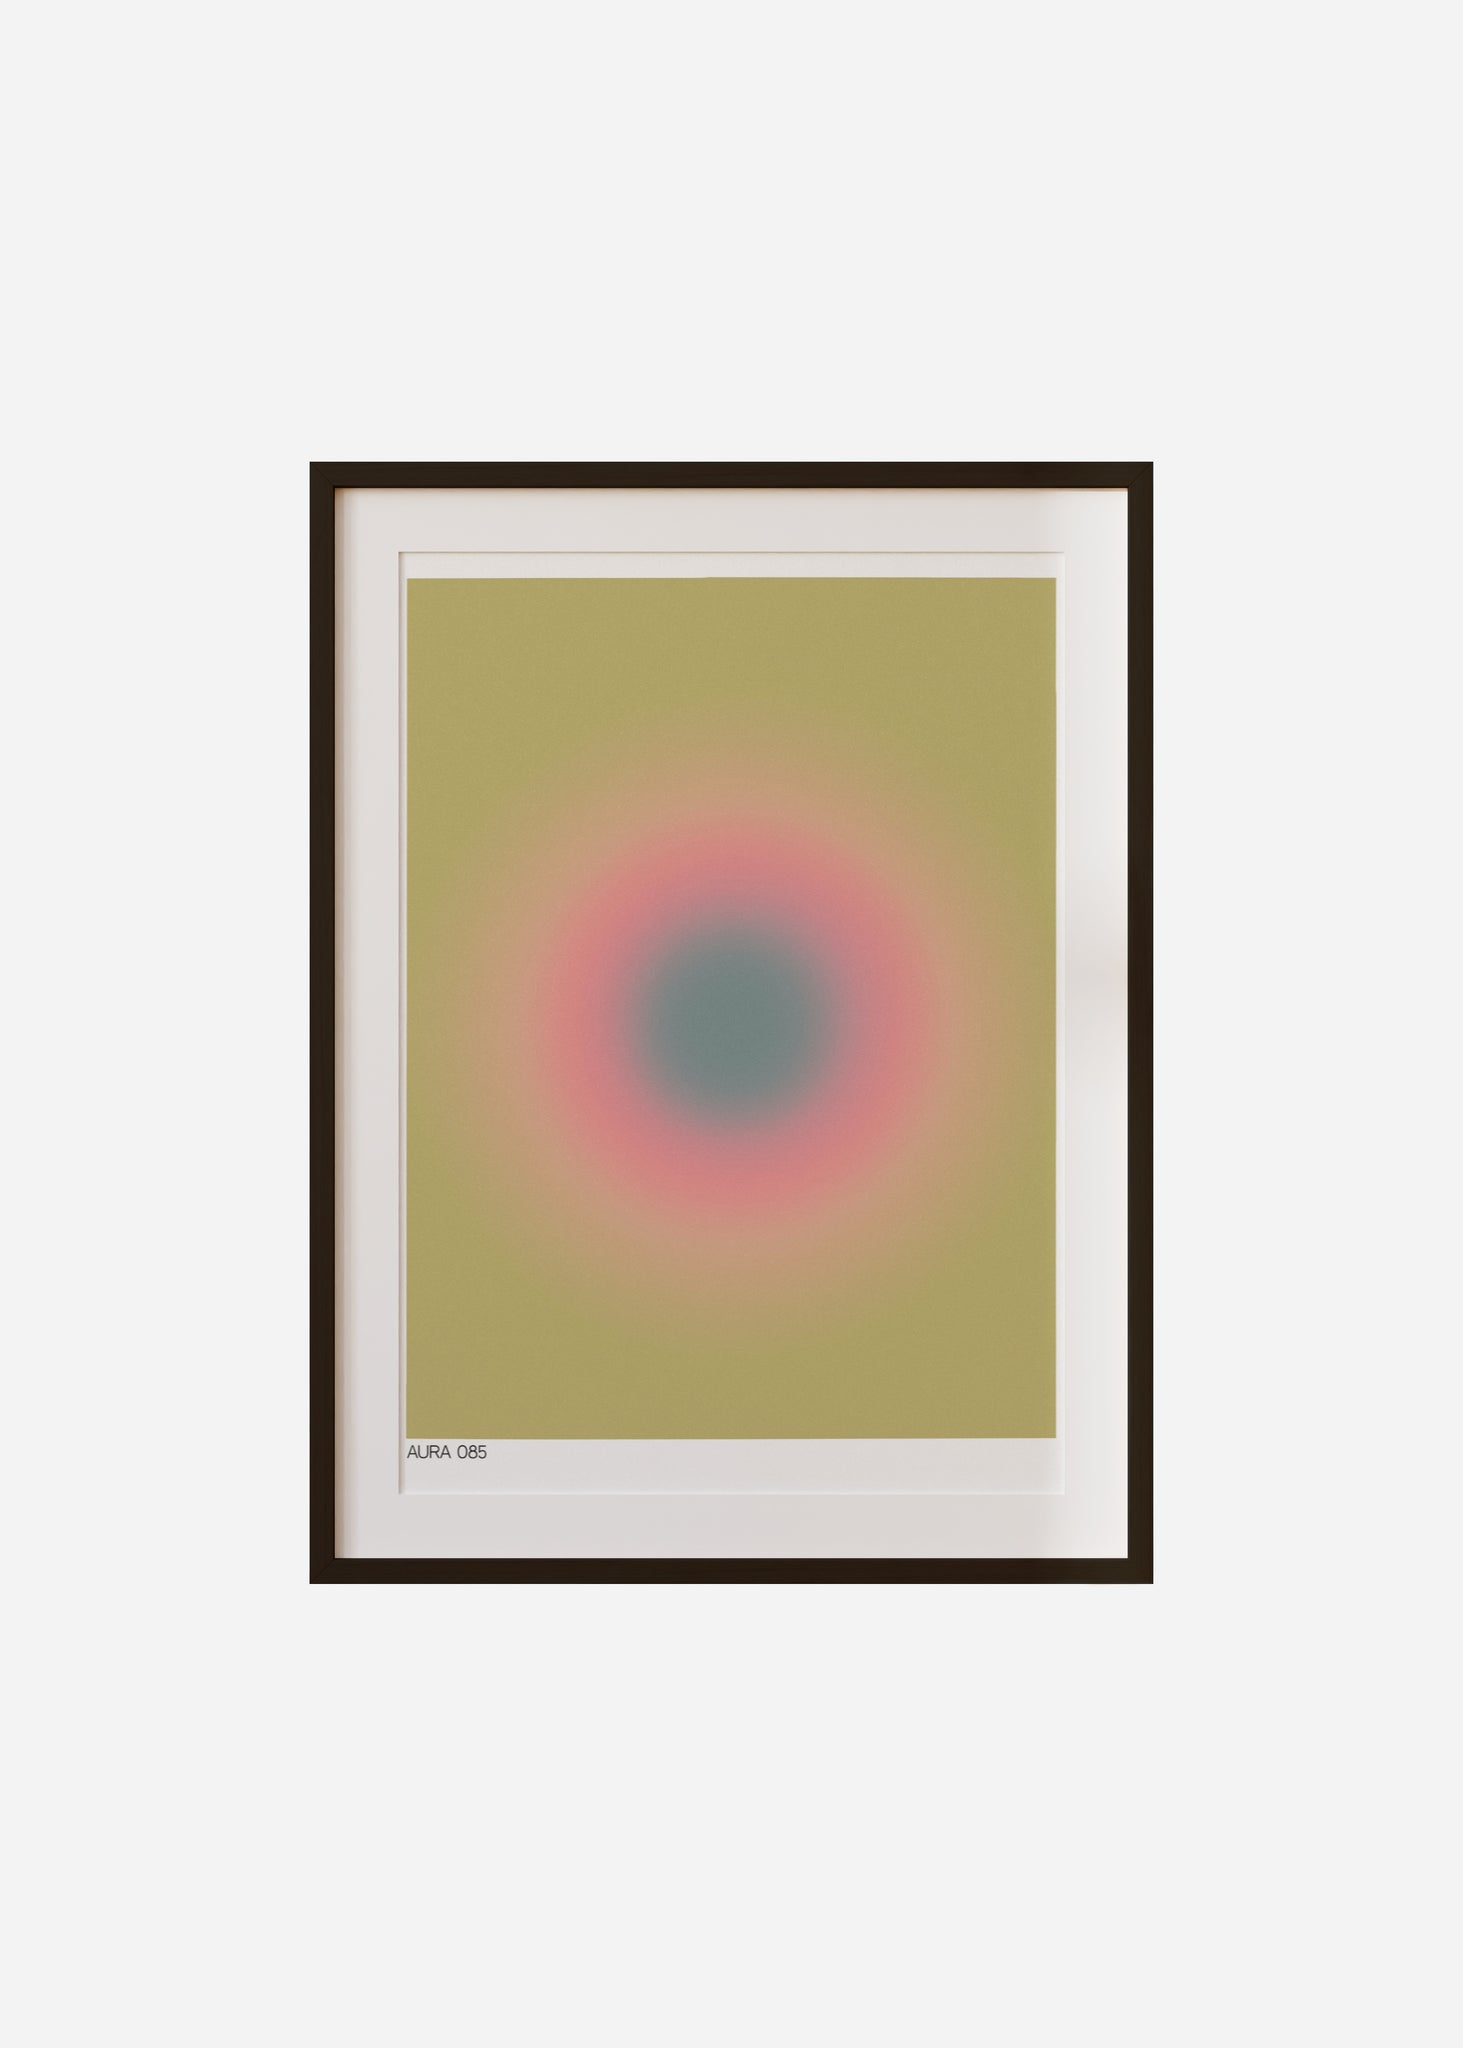 aura 085 Framed & Mounted Print